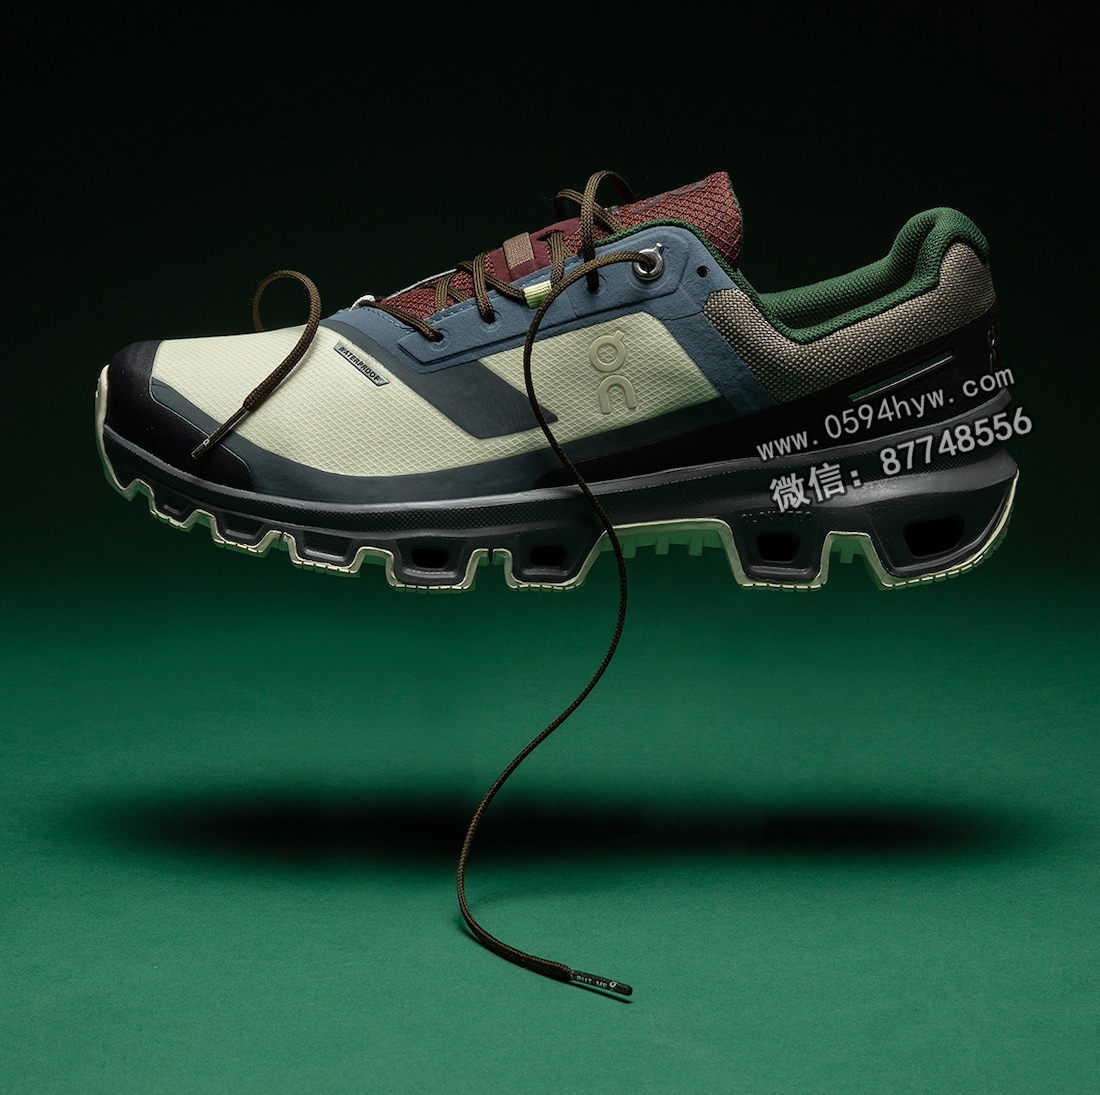 运动鞋, 跑鞋, 越野跑鞋, Packer Shoes - Packer Shoes x On Cloudventure Waterproof于10月14日发售